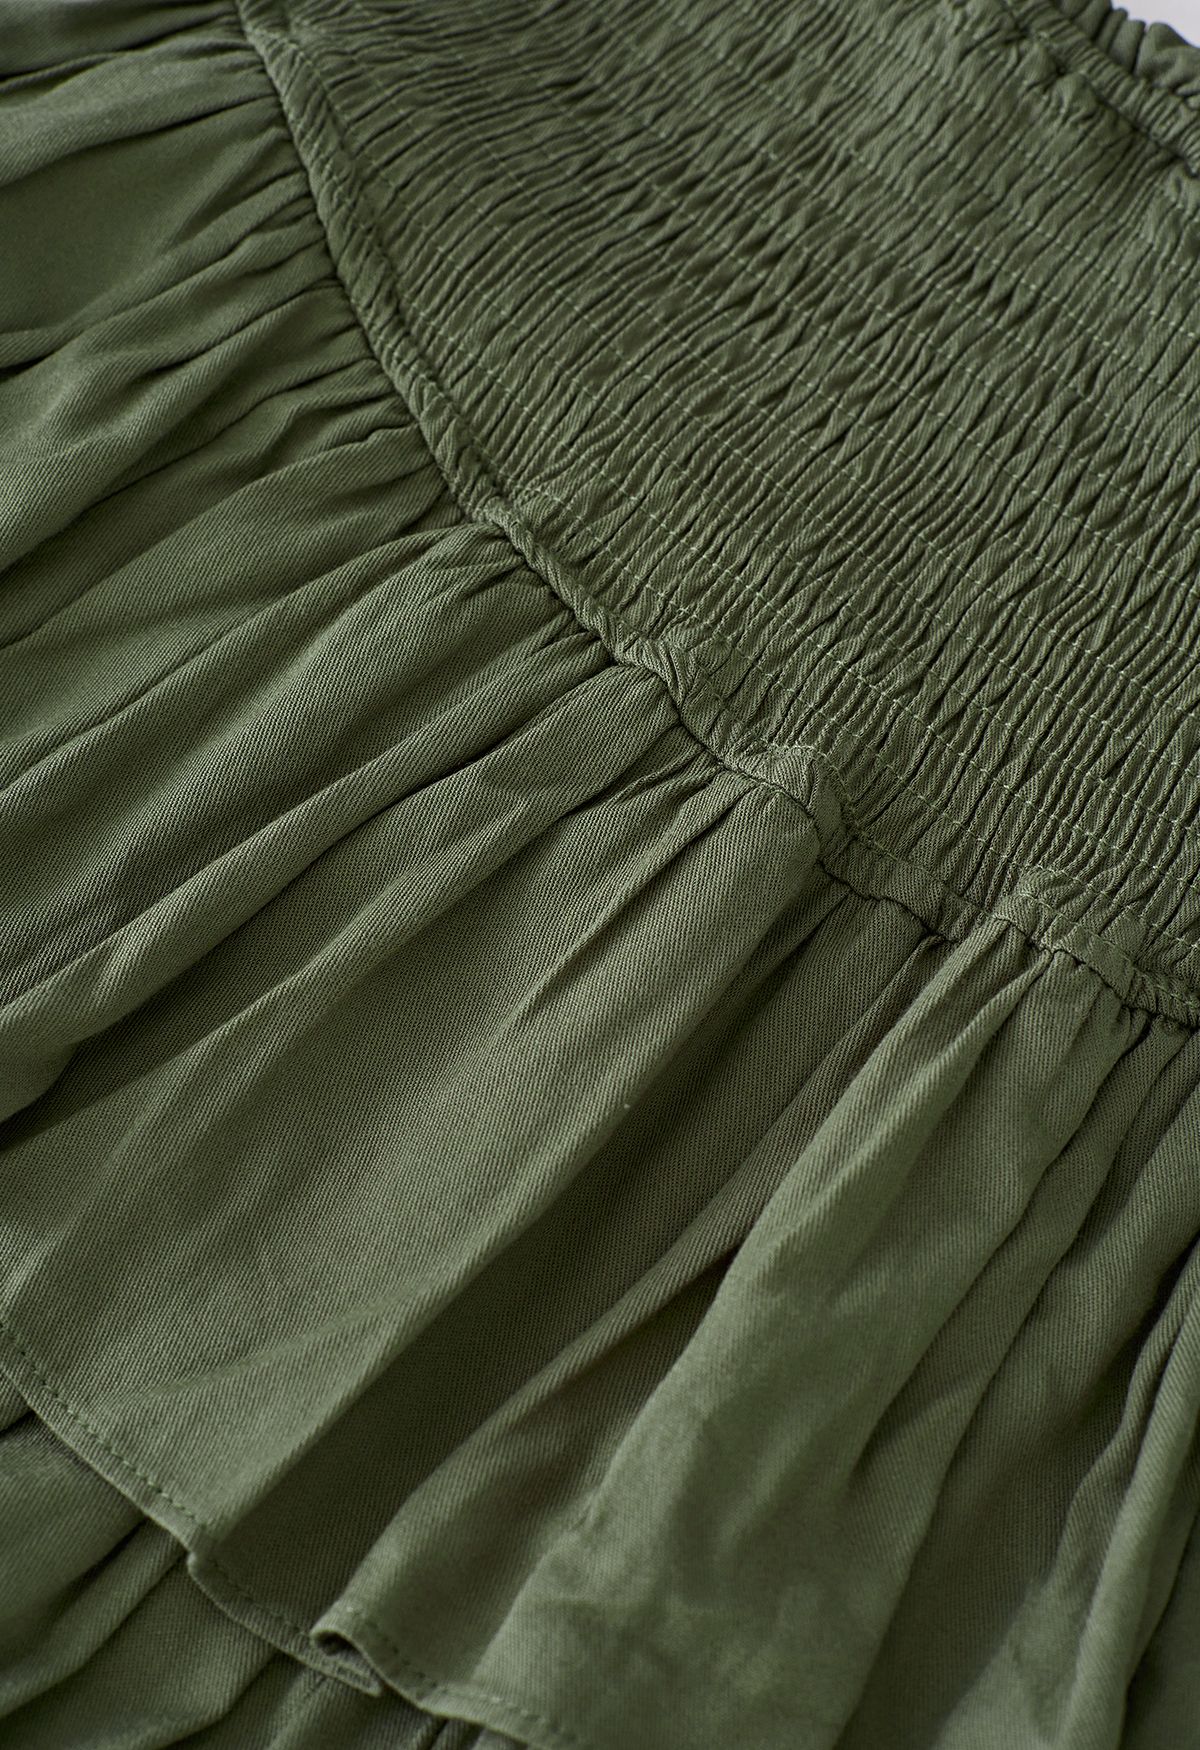 Tiered Ruffle Shirred Waist Mini Skirt in Olive